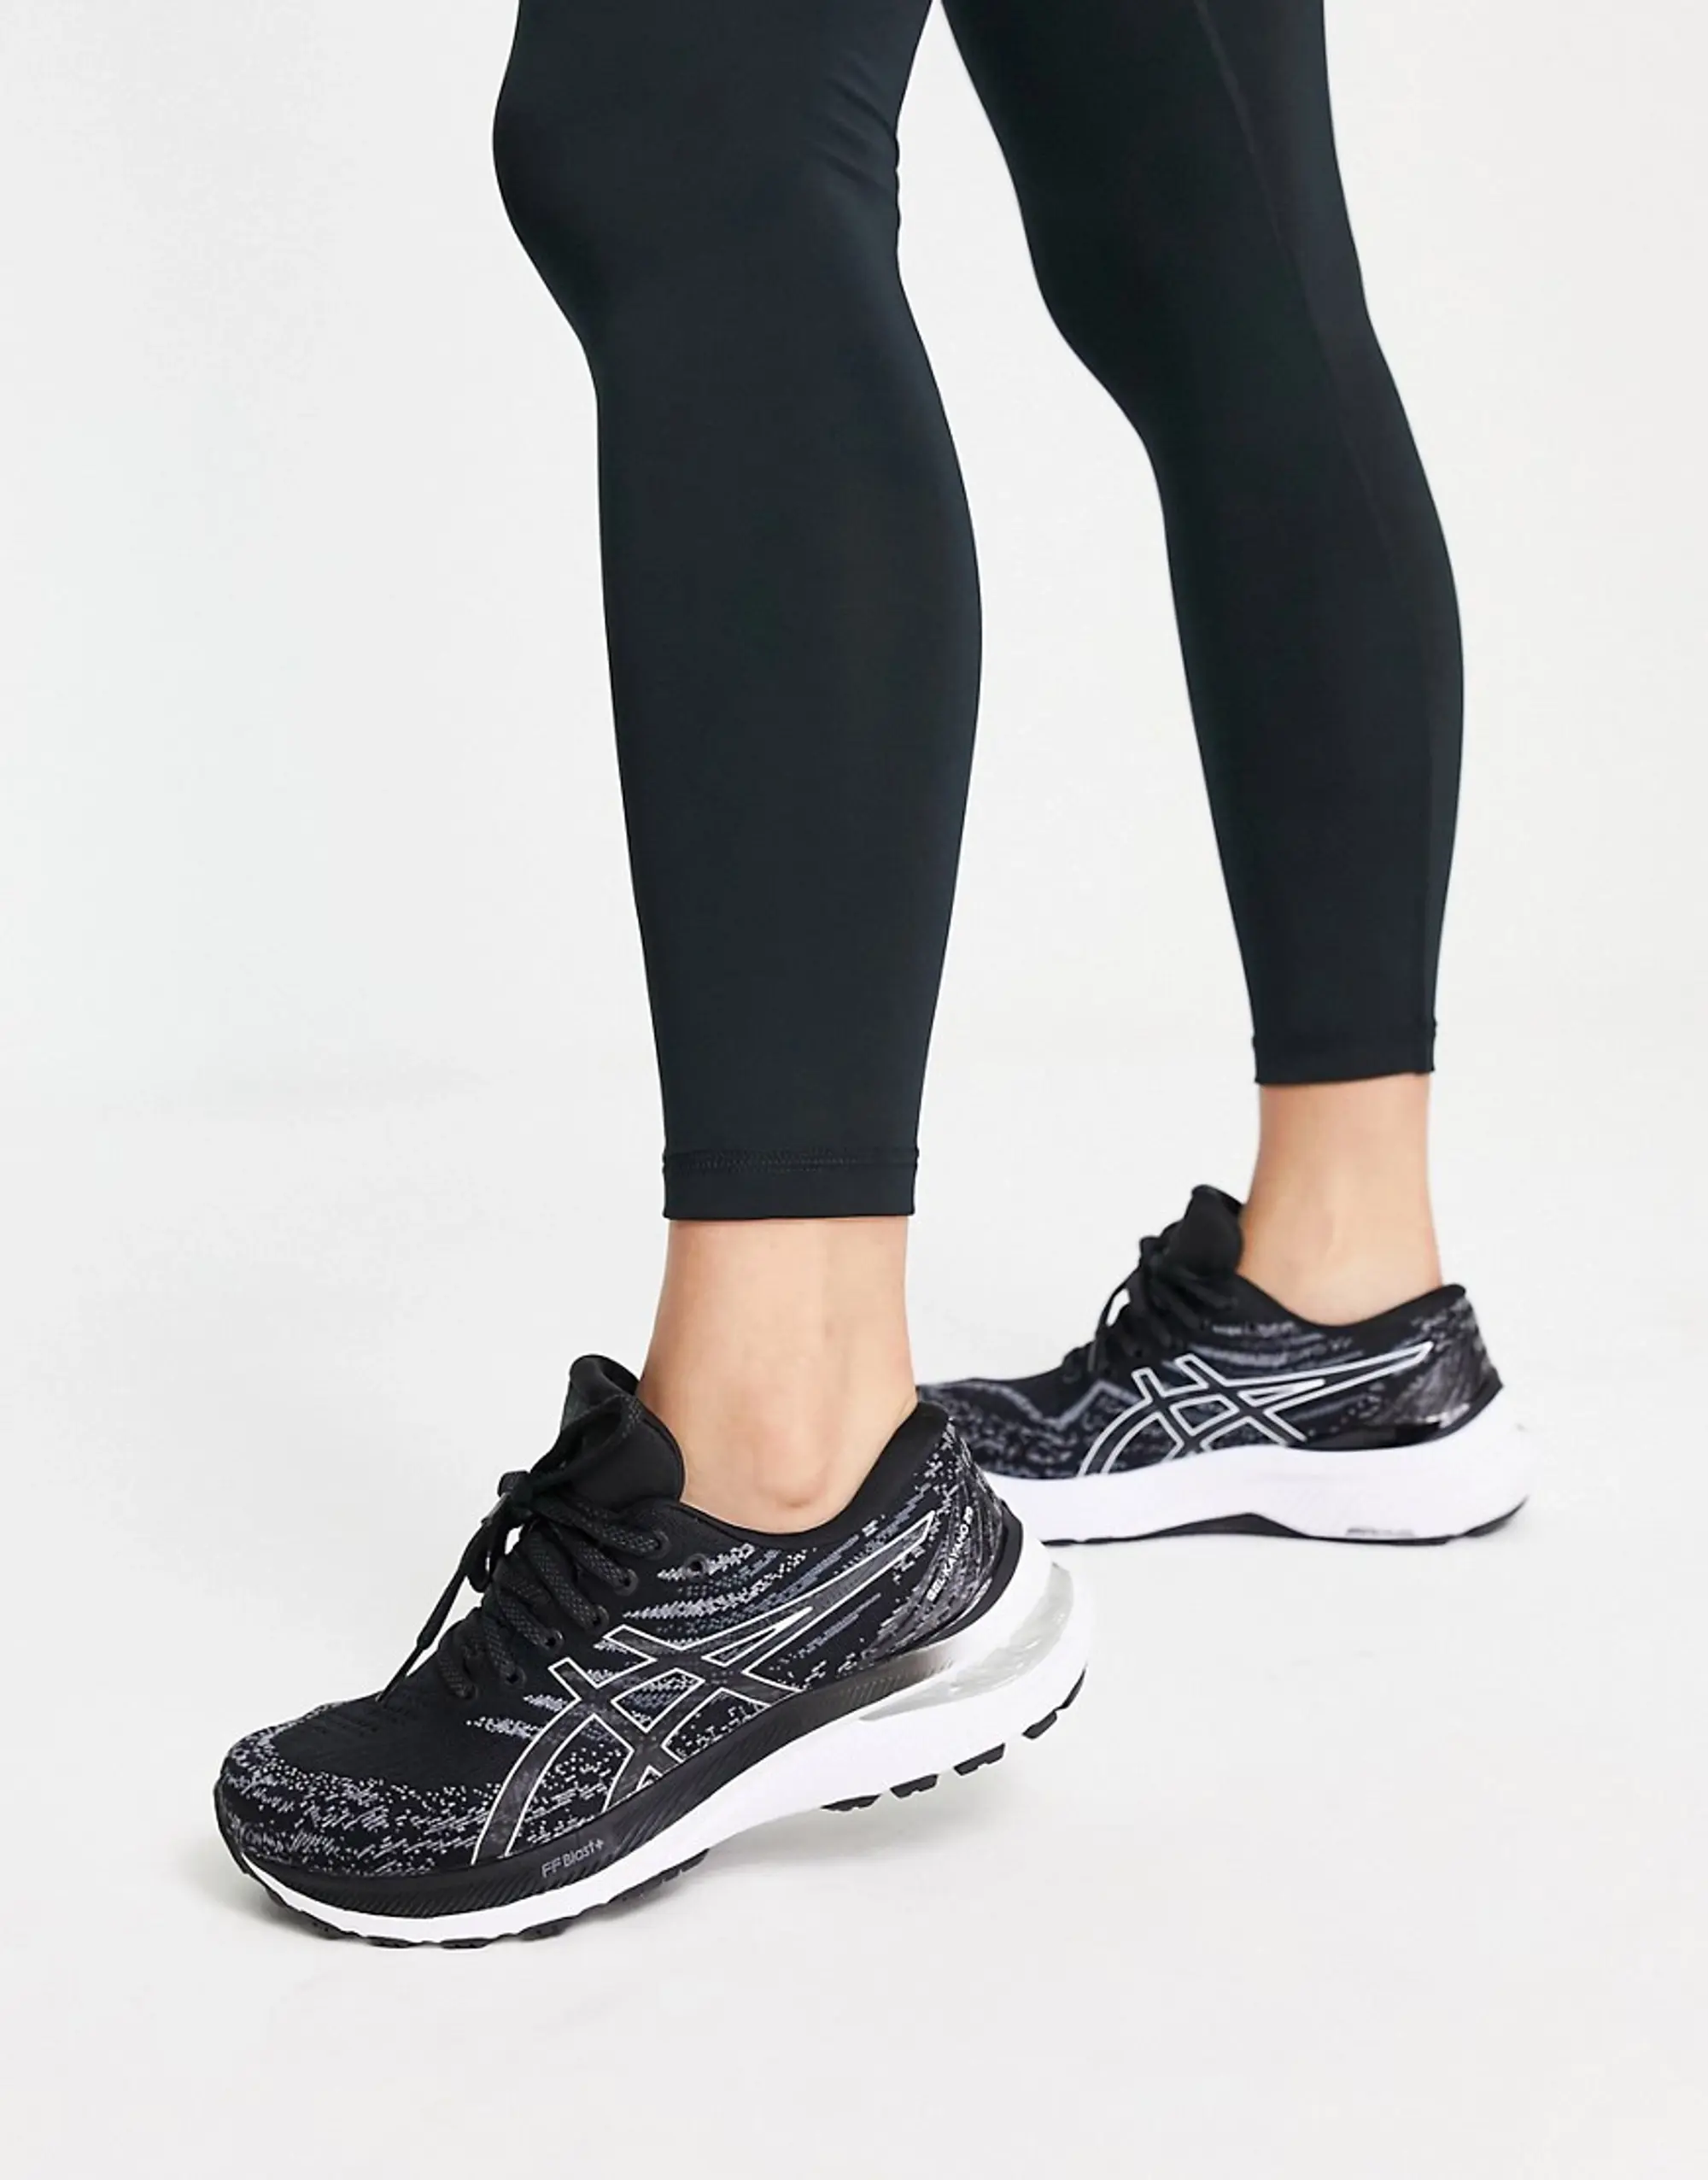 ASICS Gel-Kayano 29 Stability Running Shoe Women - Black, White